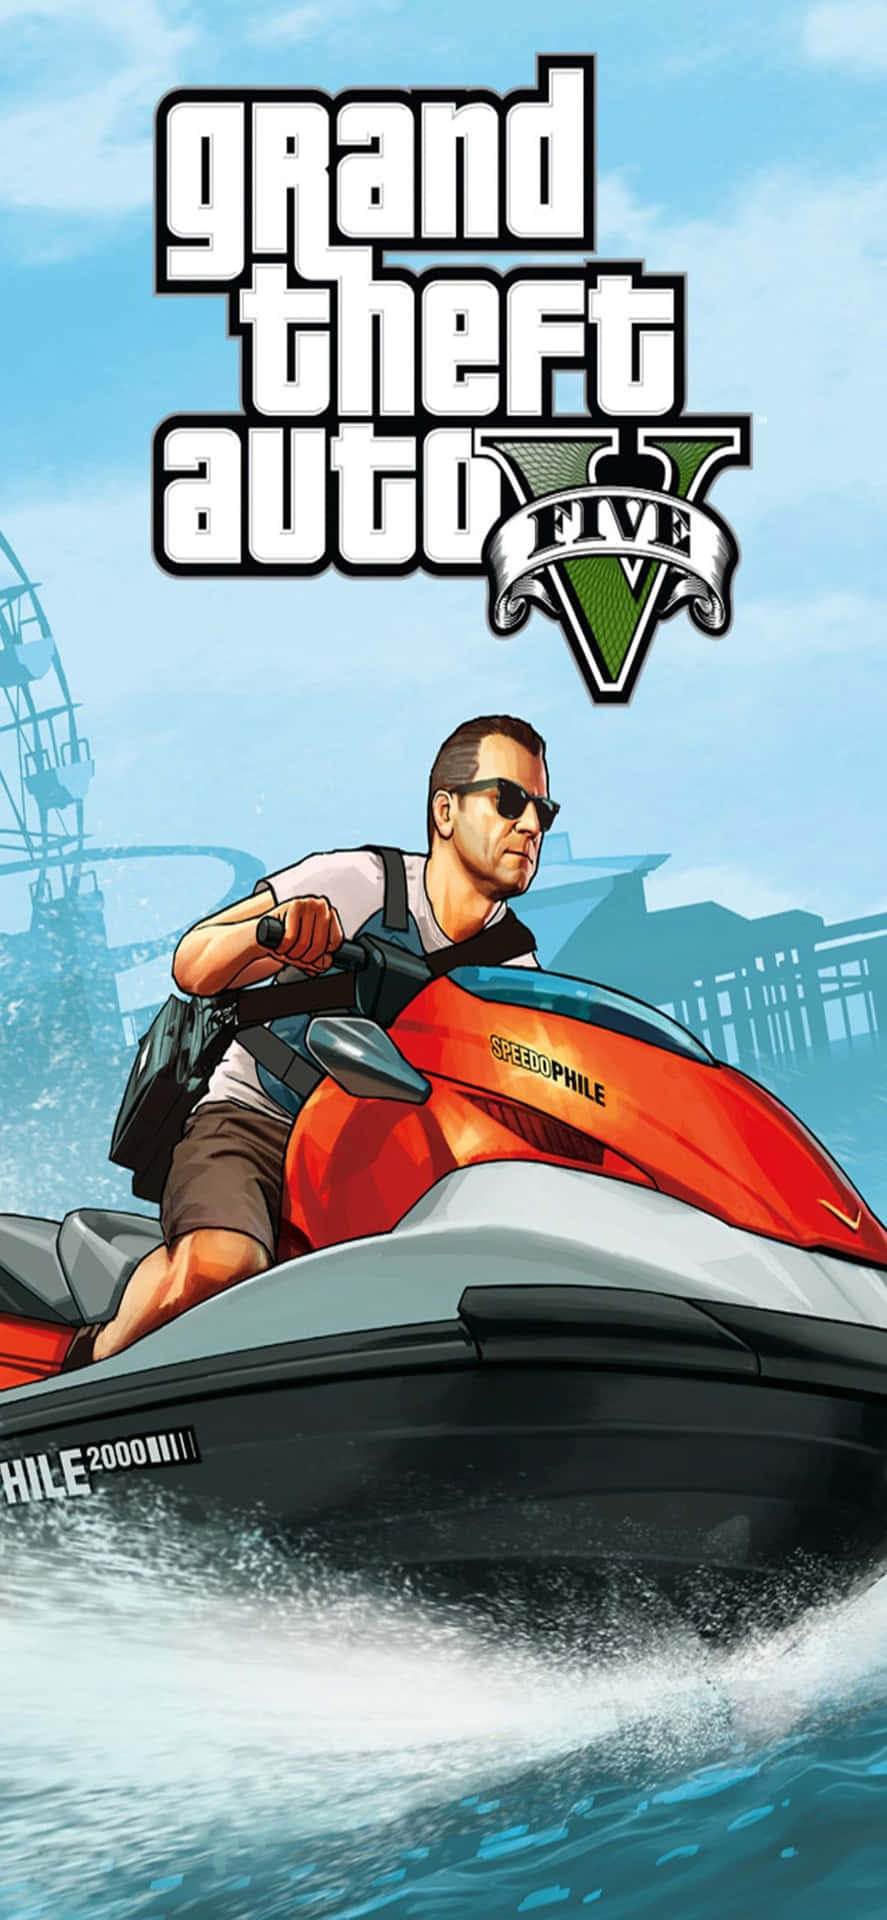 Iphone X Grand Theft Auto V Background And Jet Ski